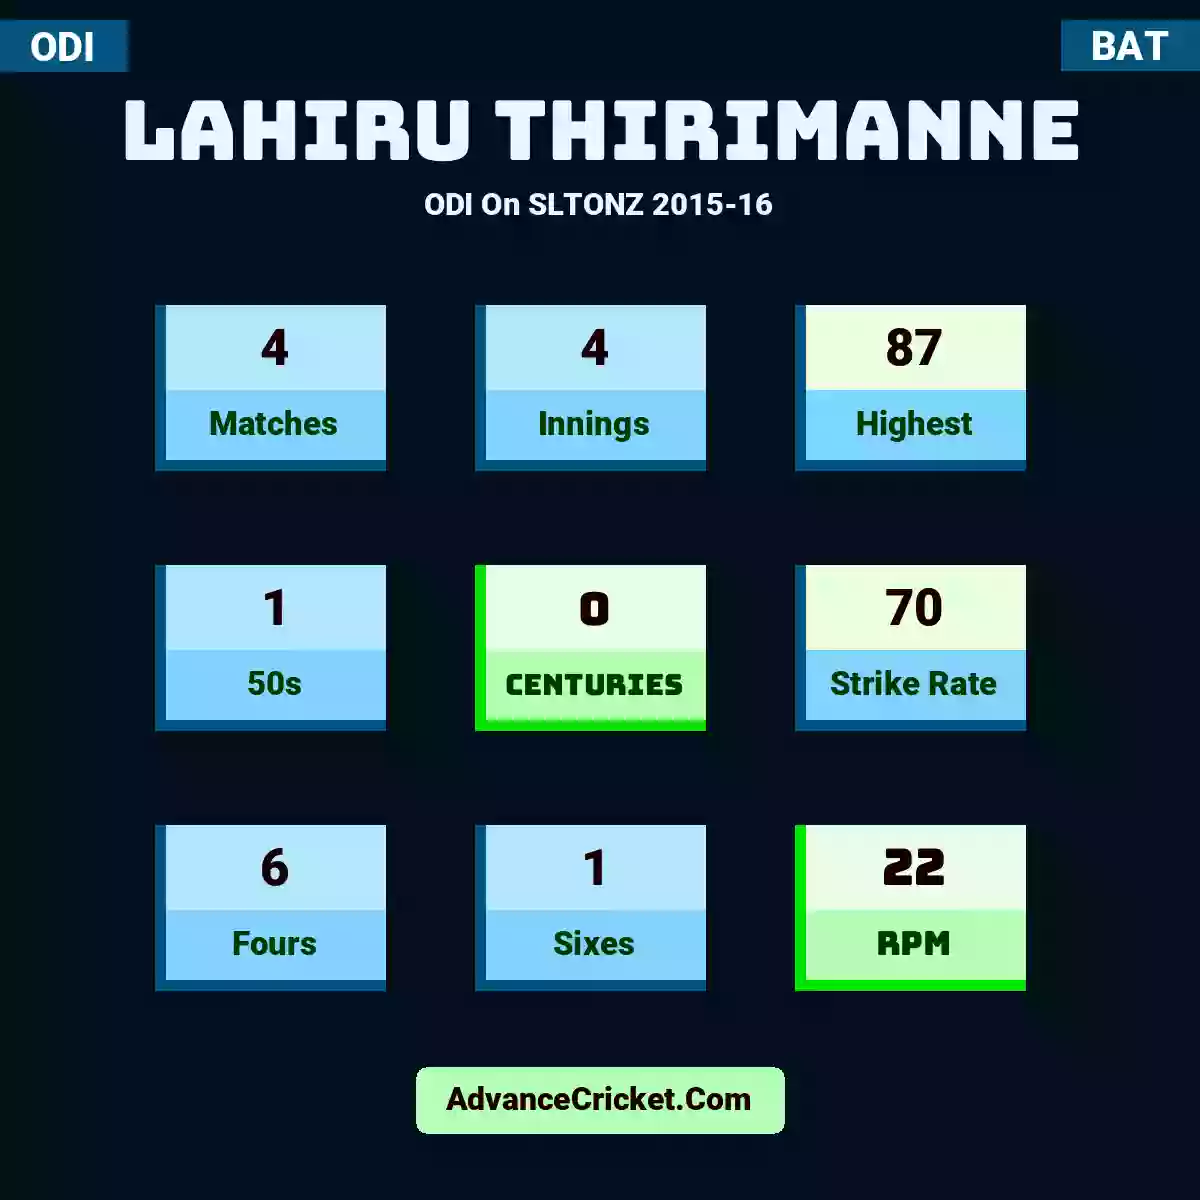 Lahiru Thirimanne ODI  On SLTONZ 2015-16, Lahiru Thirimanne played 4 matches, scored 87 runs as highest, 1 half-centuries, and 0 centuries, with a strike rate of 70. L.Thirimanne hit 6 fours and 1 sixes, with an RPM of 22.